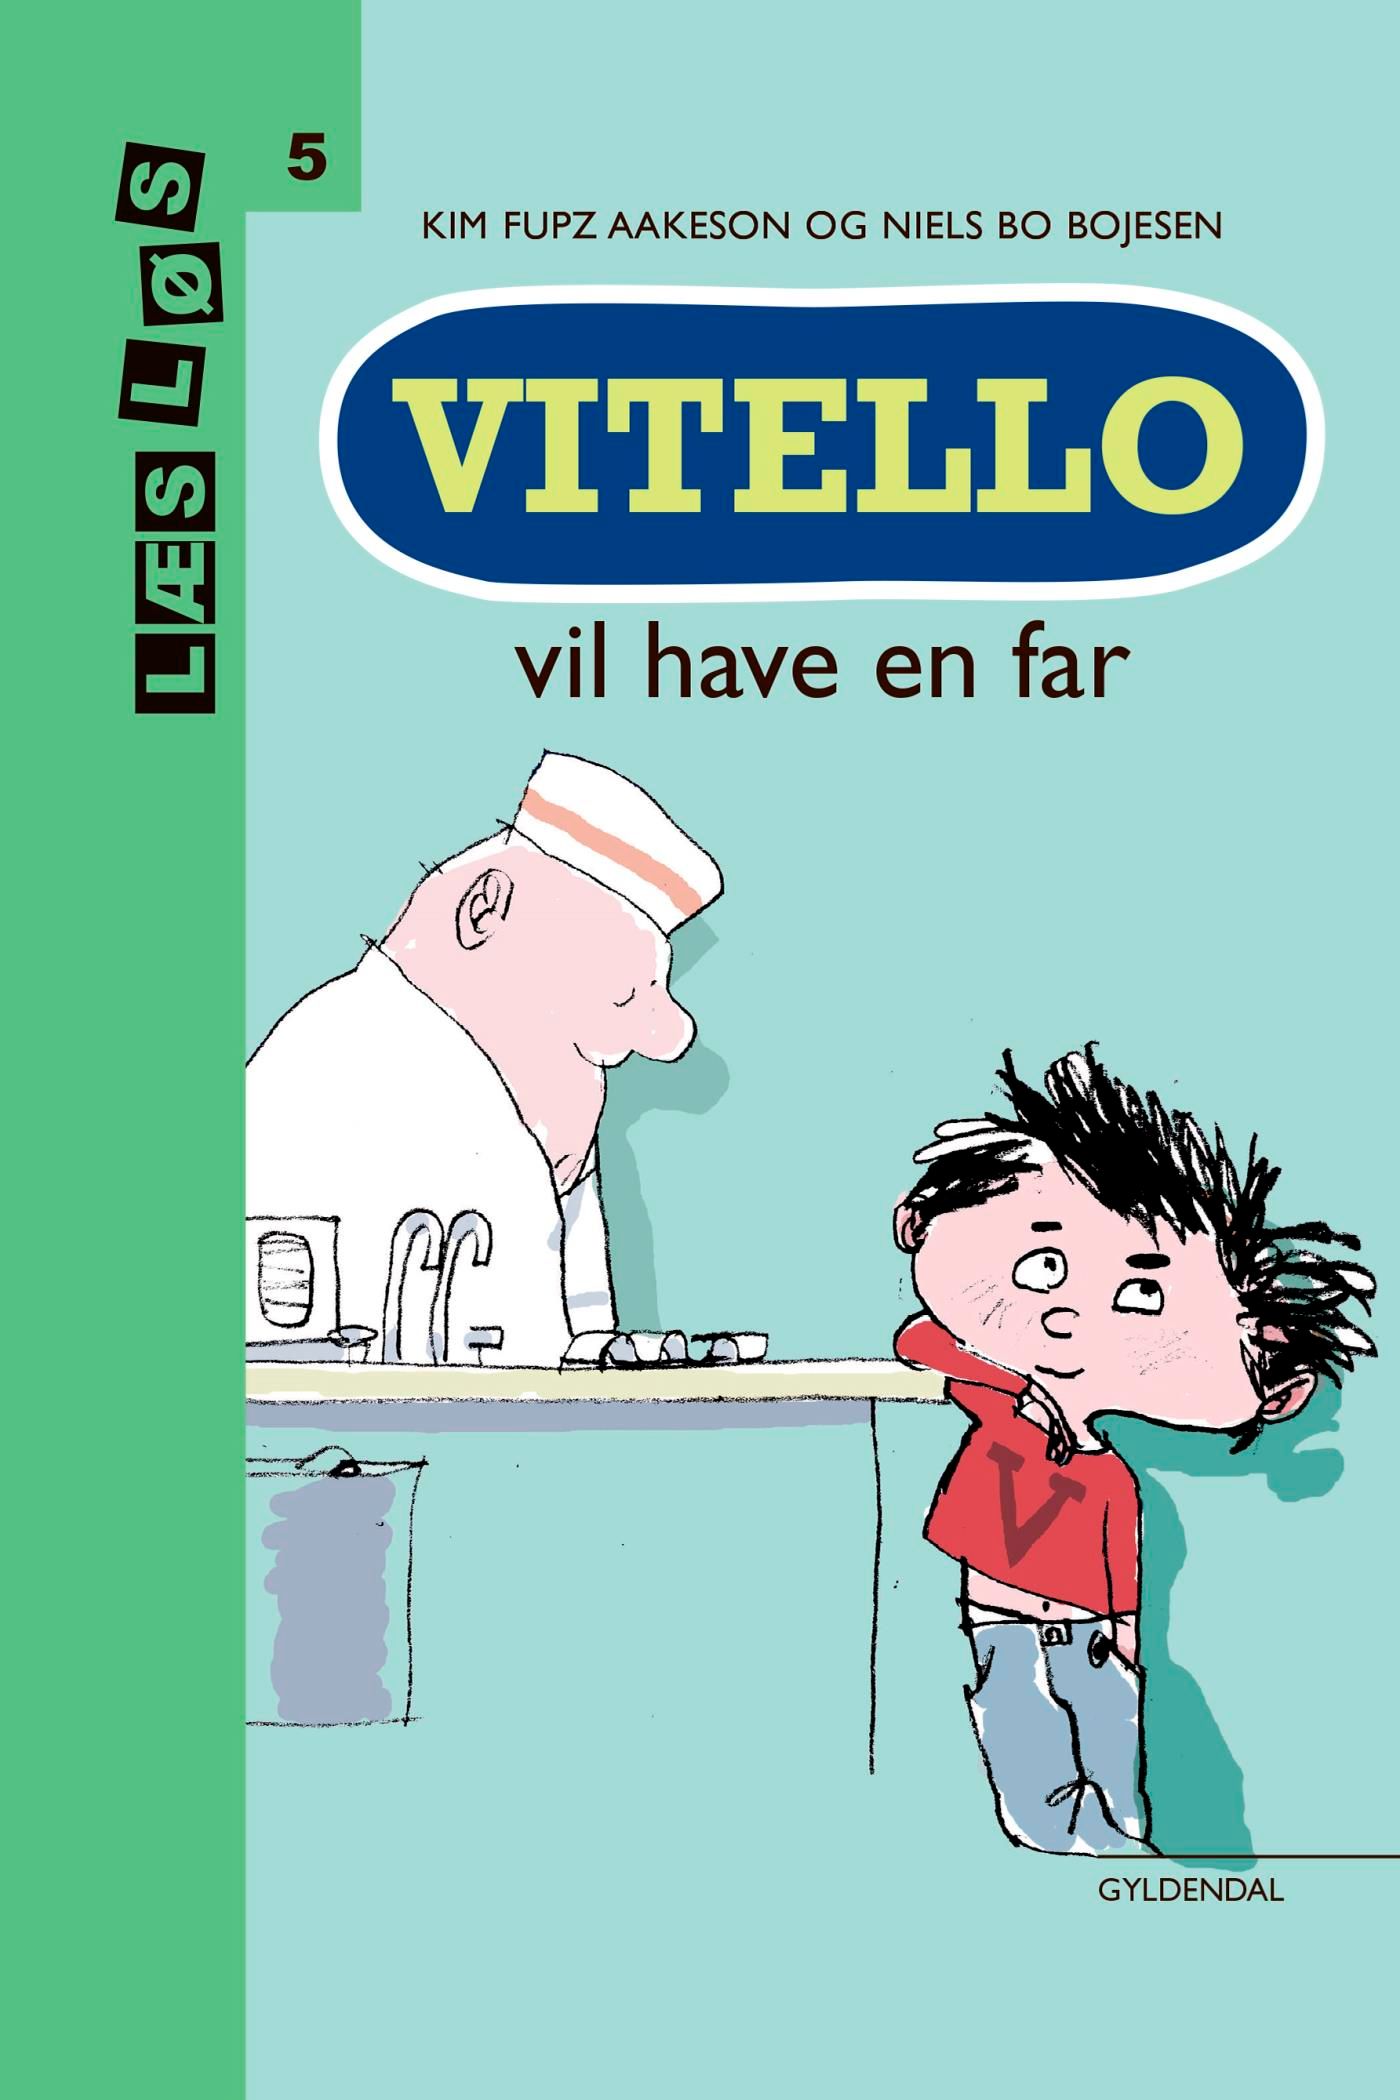 Vitello vil have en far, e-bog af Kim Fupz Aakeson